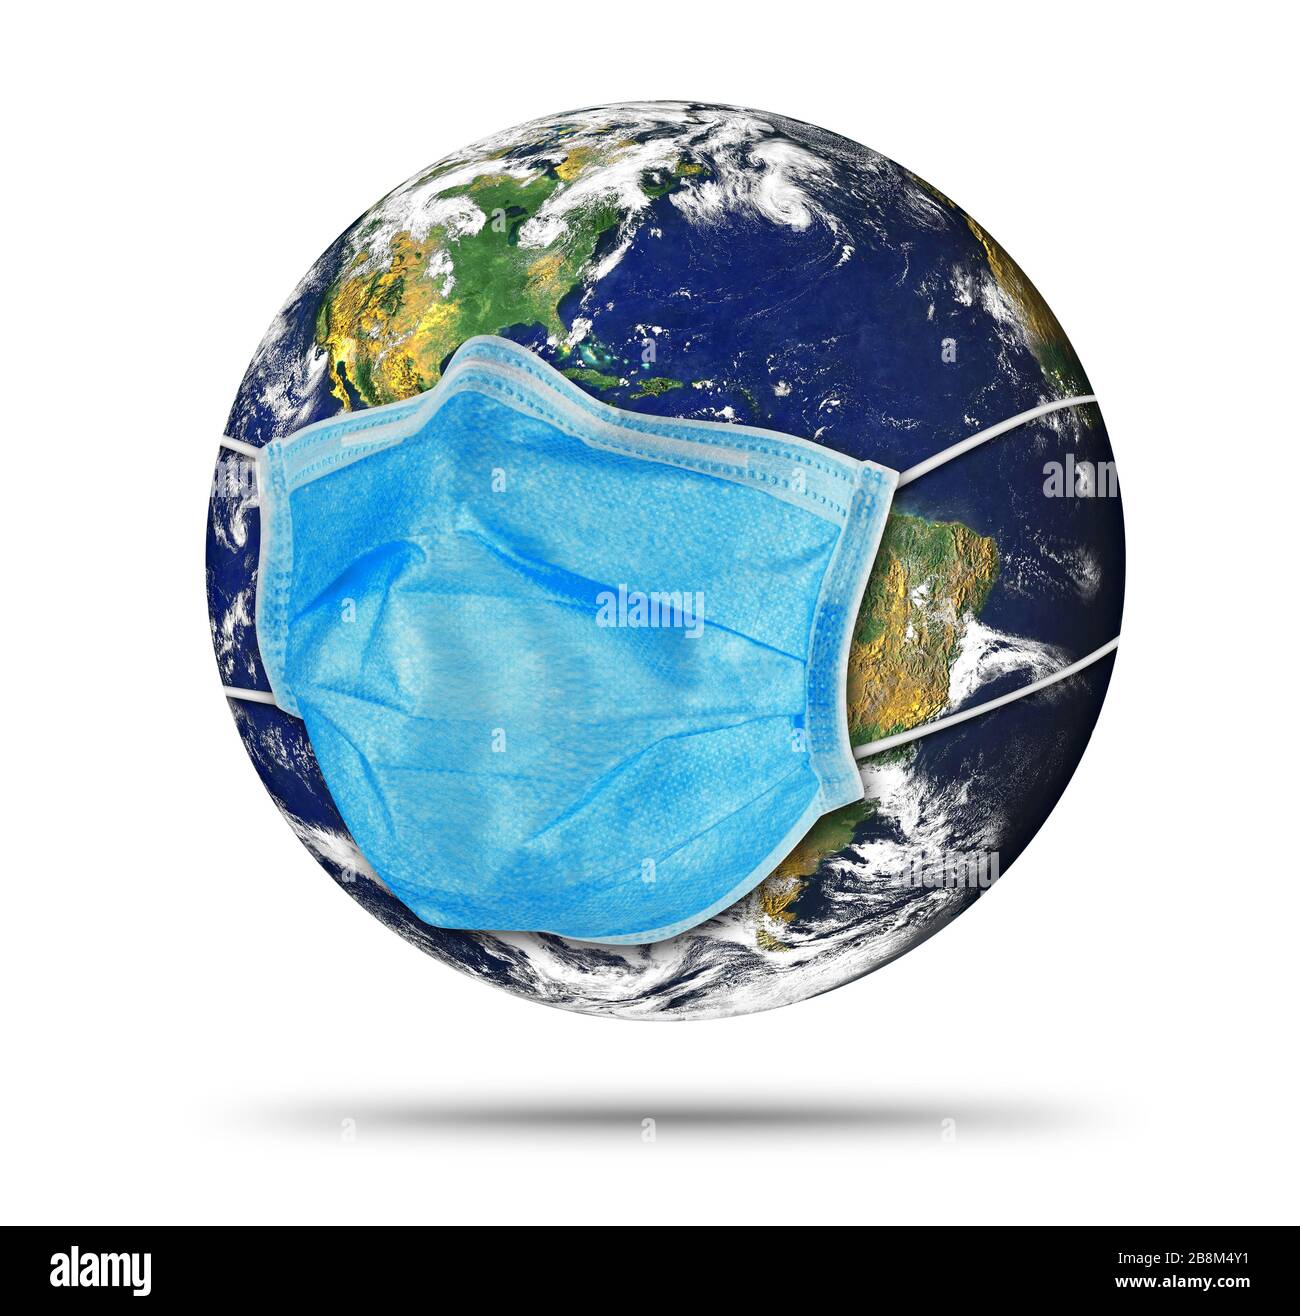 Coronavirus earth world globe with respirator breathing face mask. Corna virus global  outbreak pandemic epidemic medical prevention concept isolated Stock Photo